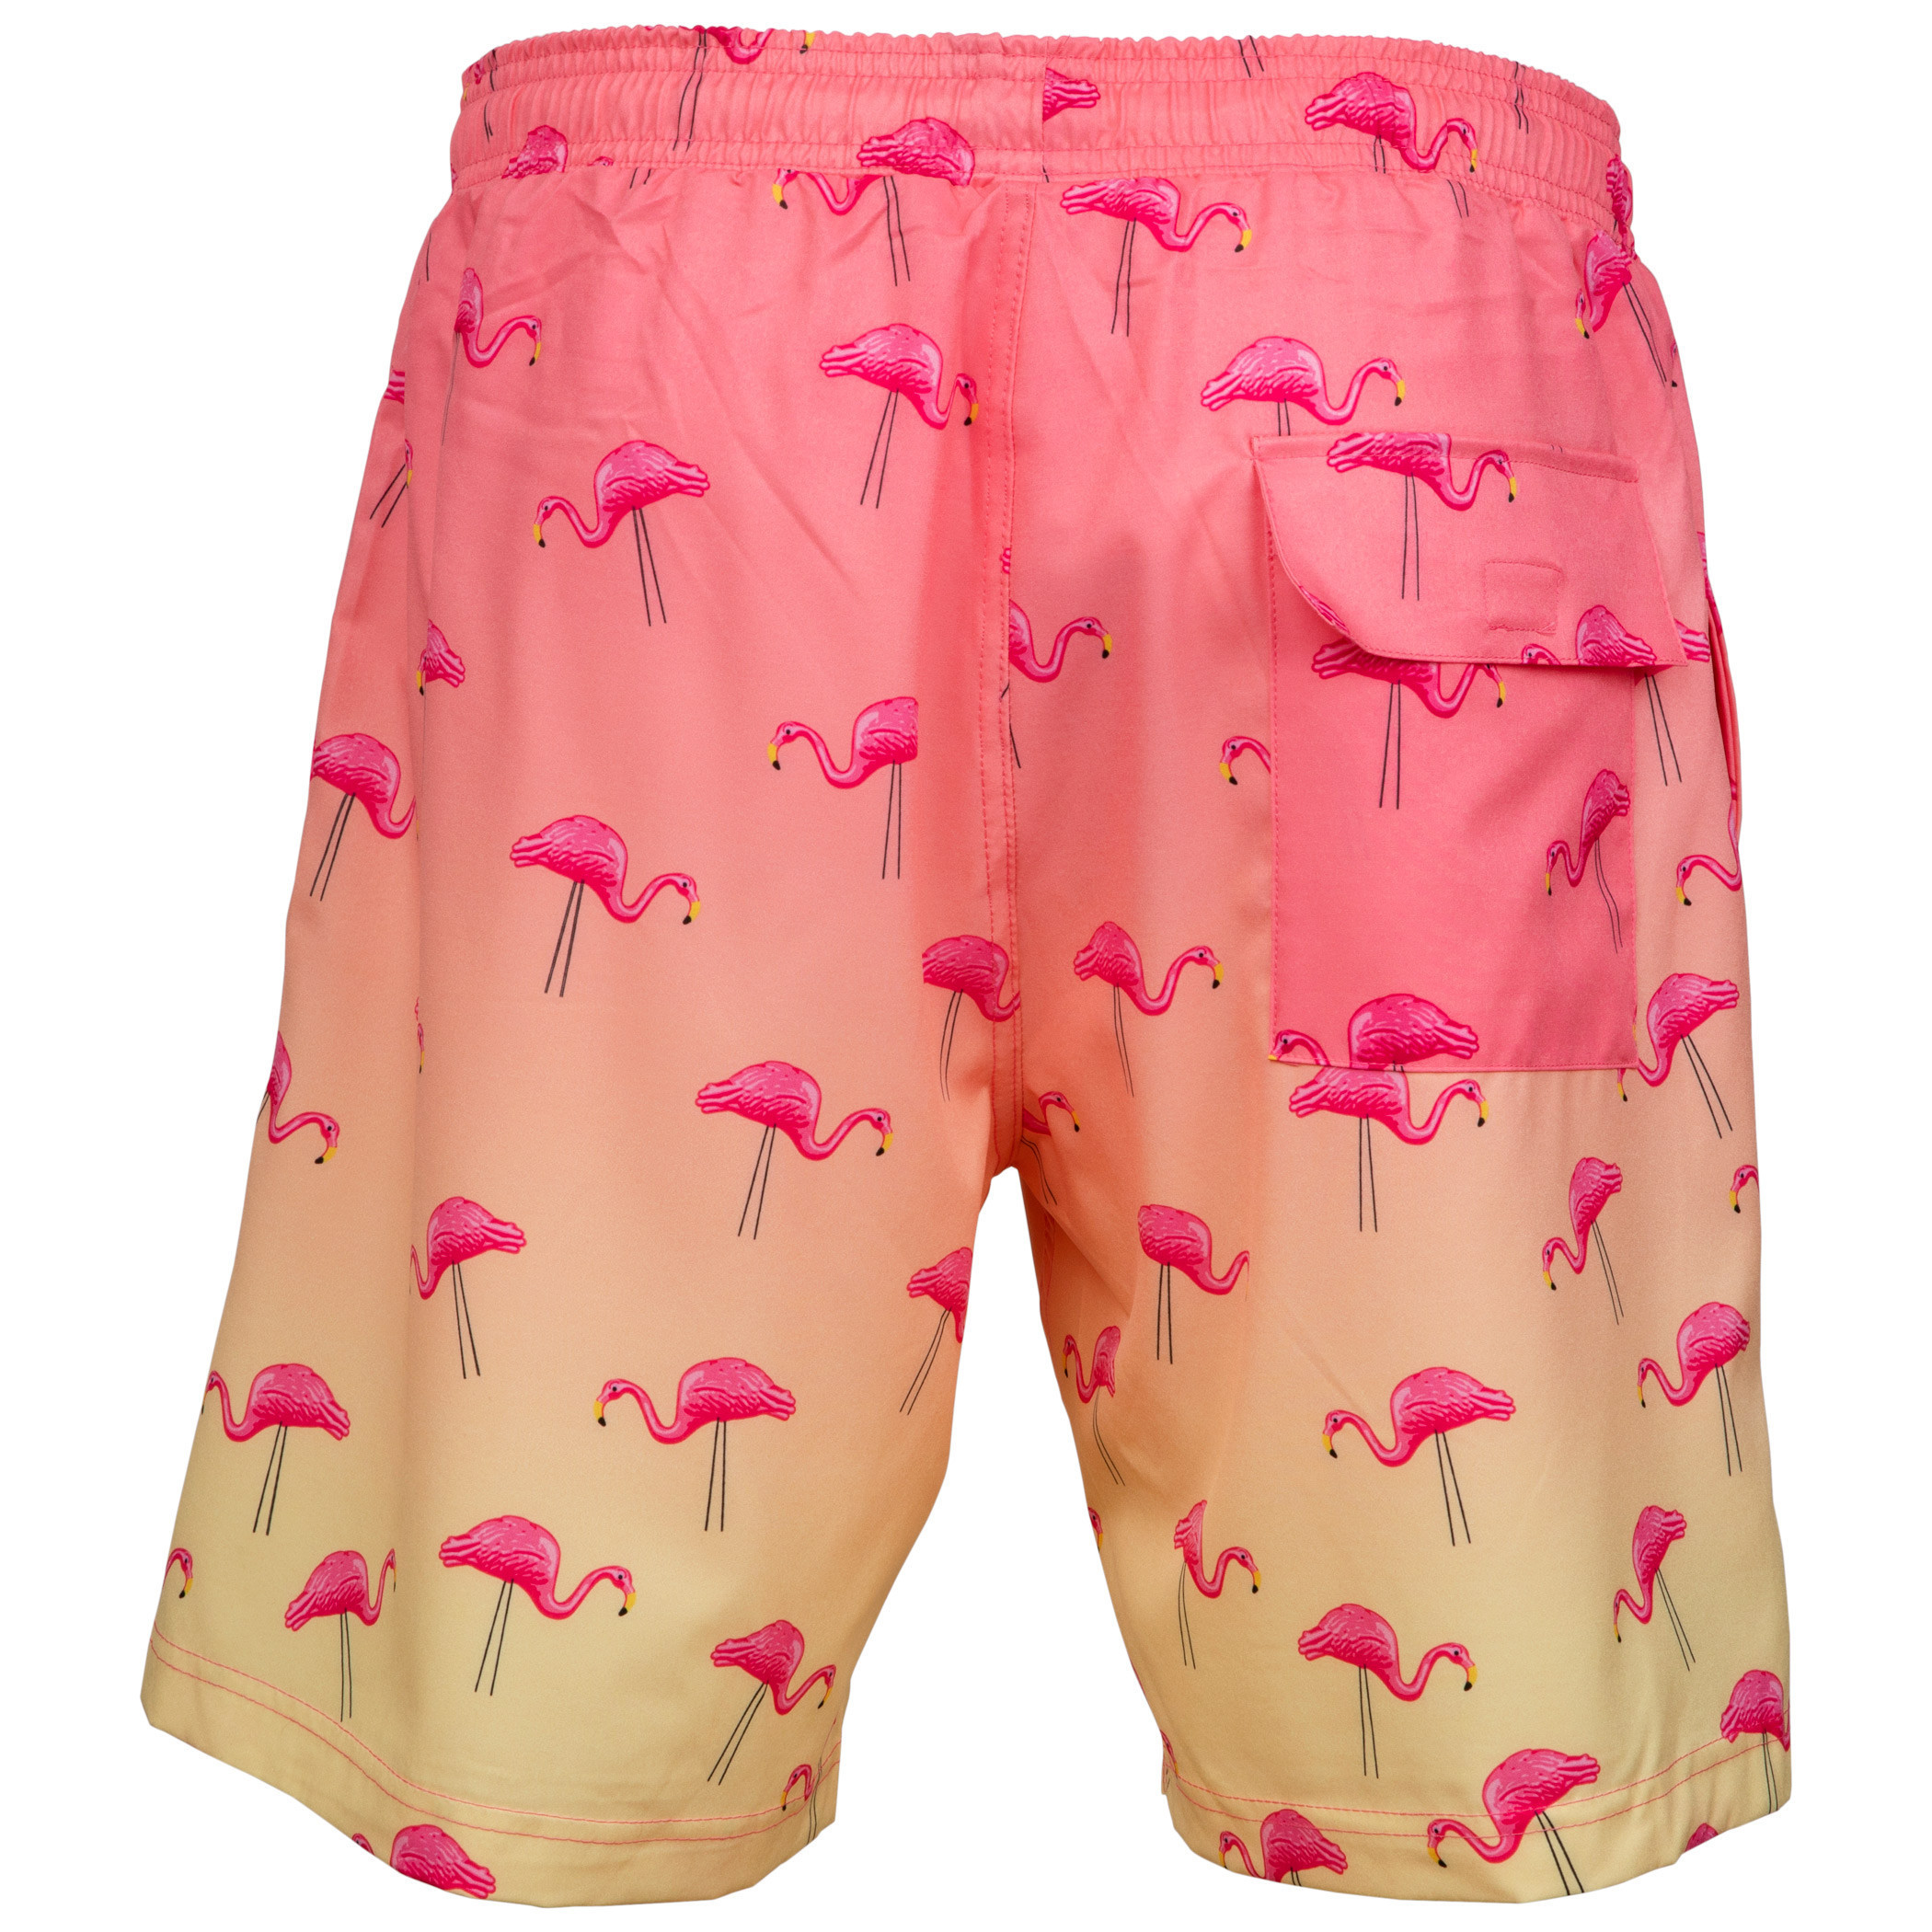 Naturdays Natural Light Flamingo Swimsuit